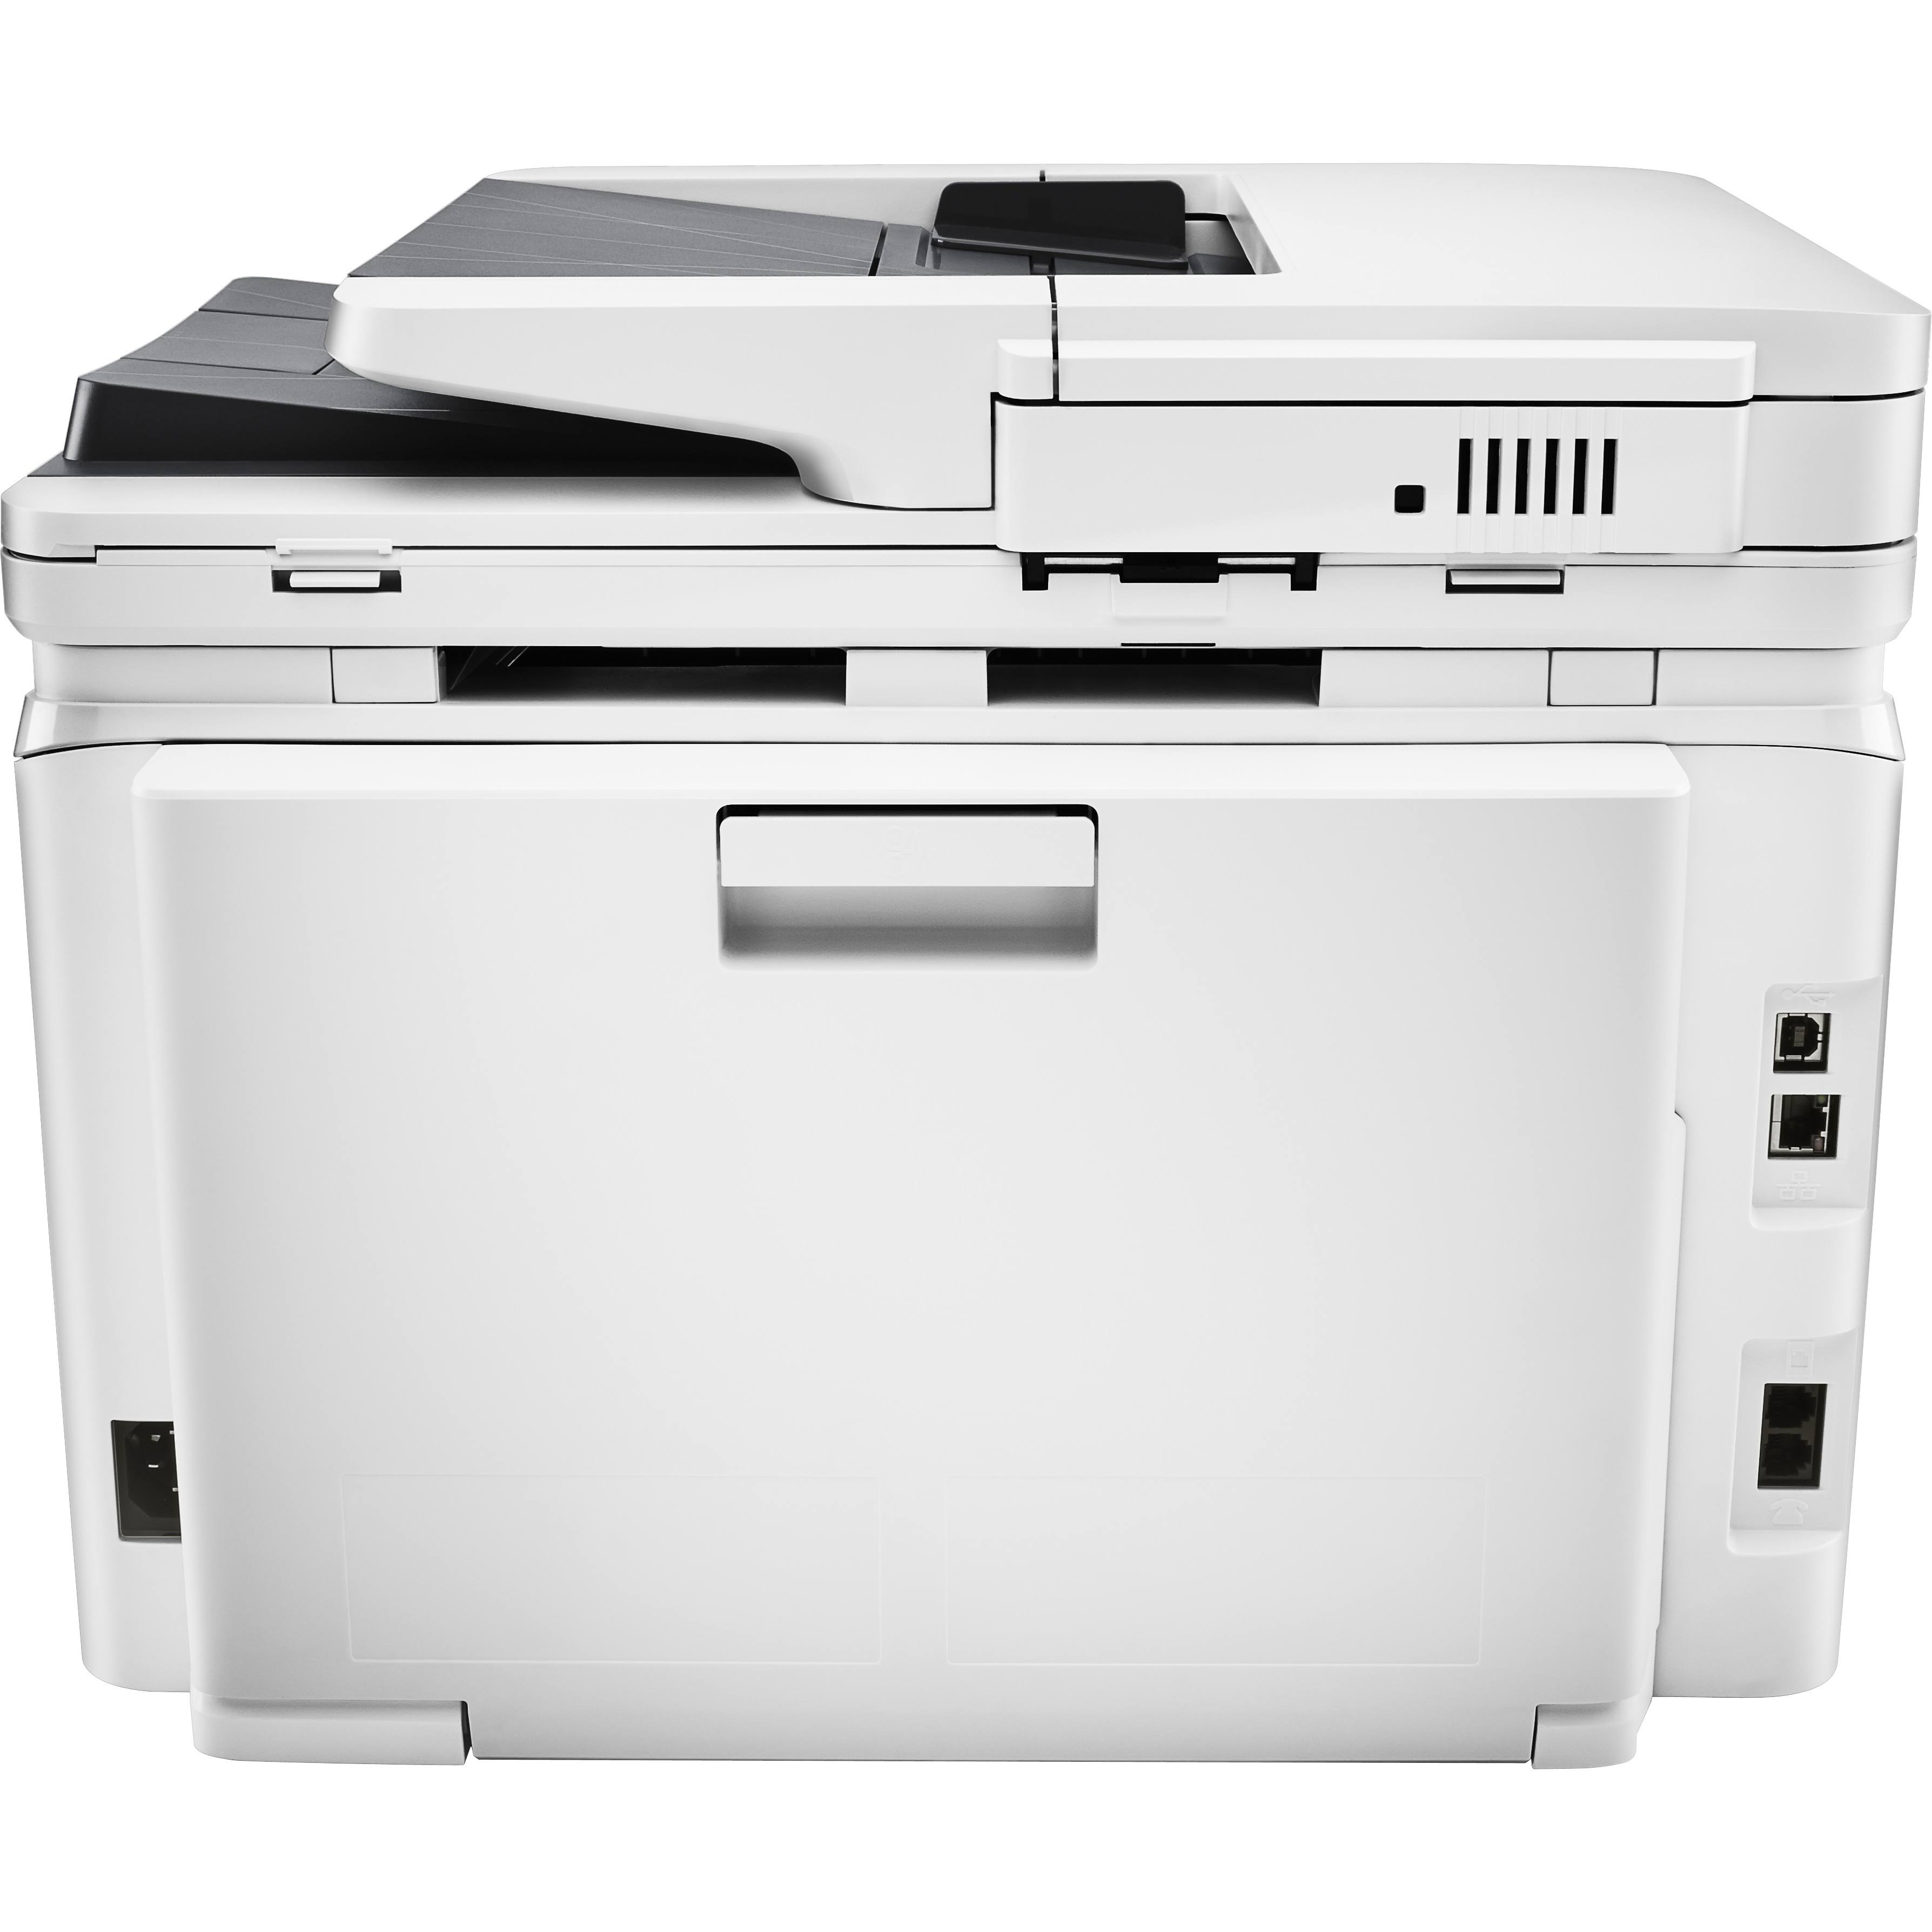 HP LaserJet Pro M277dw Wireless All-in-One Color Printer (Certified Refurbished)